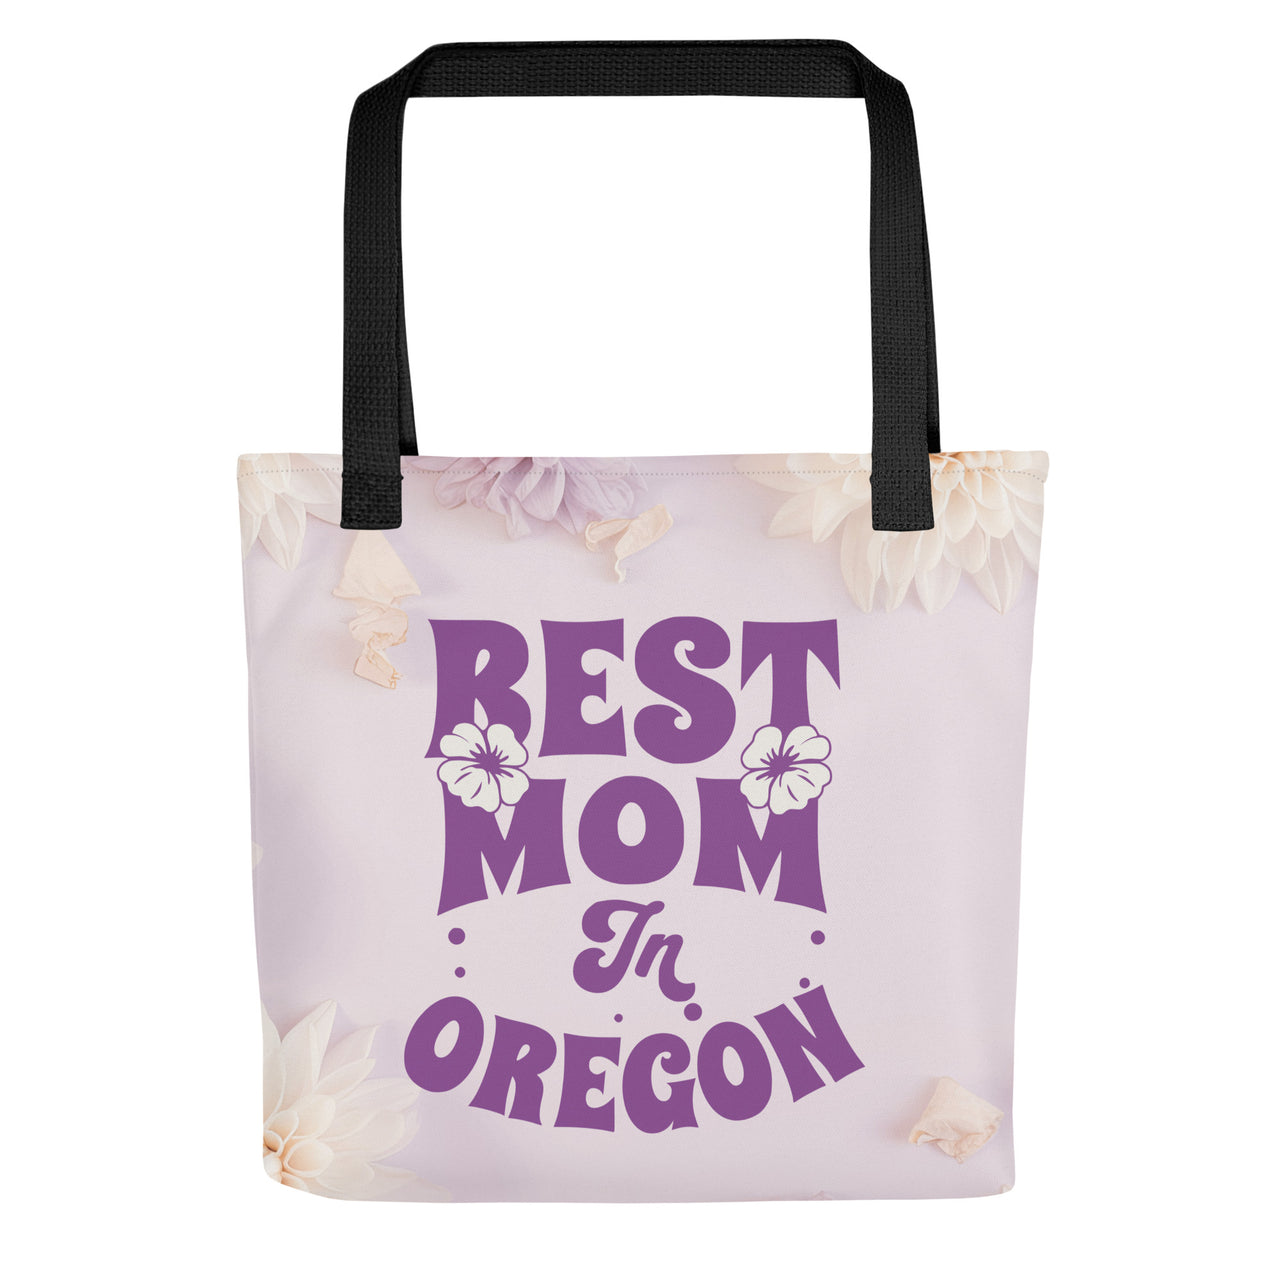 Best Mom in Oregon/3 - Tote bag